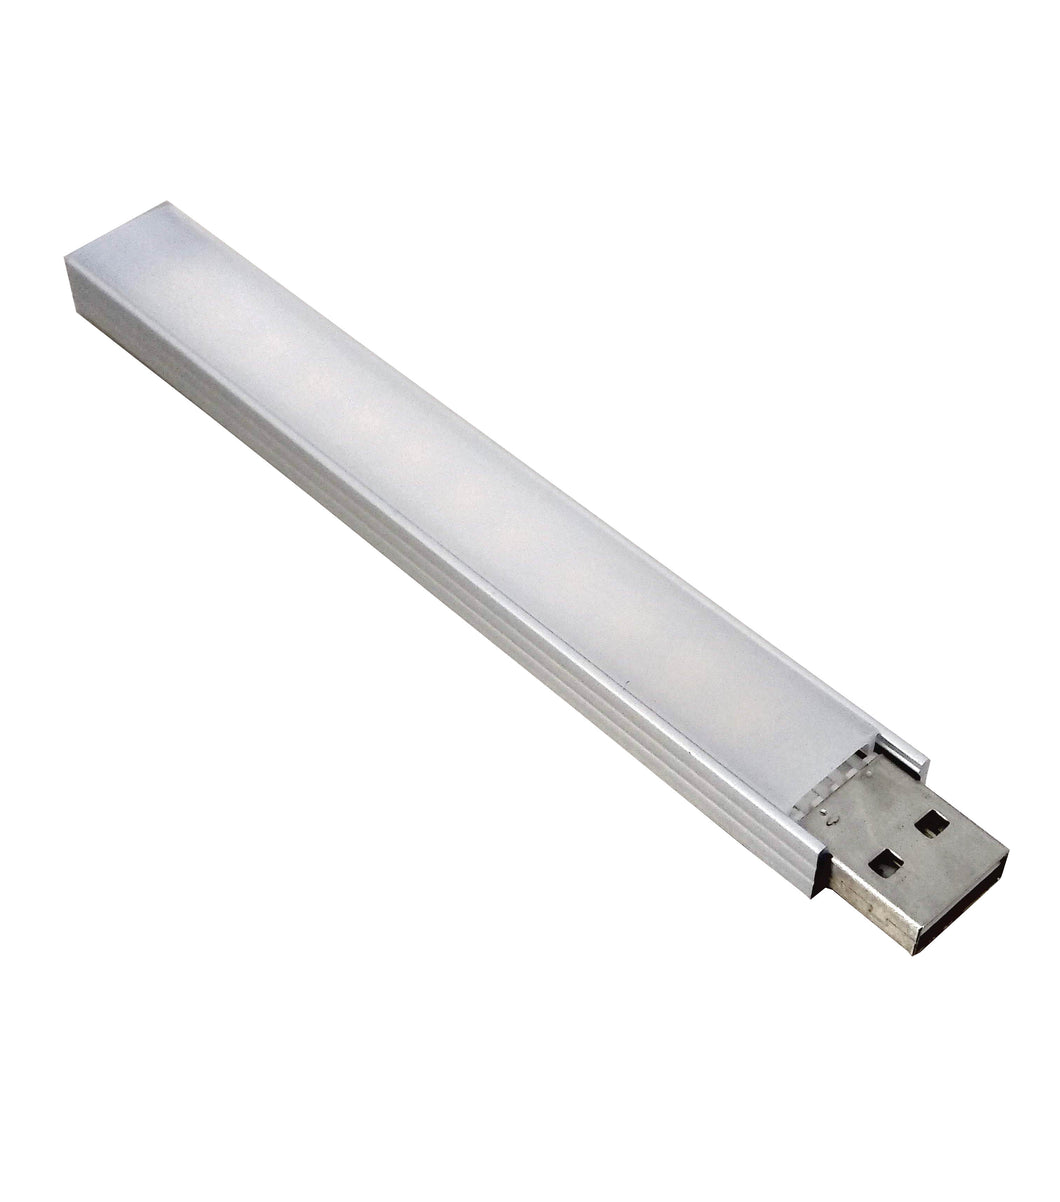 USB Stick Light Dimmable Touch Switch LED Light 3000k/6000k